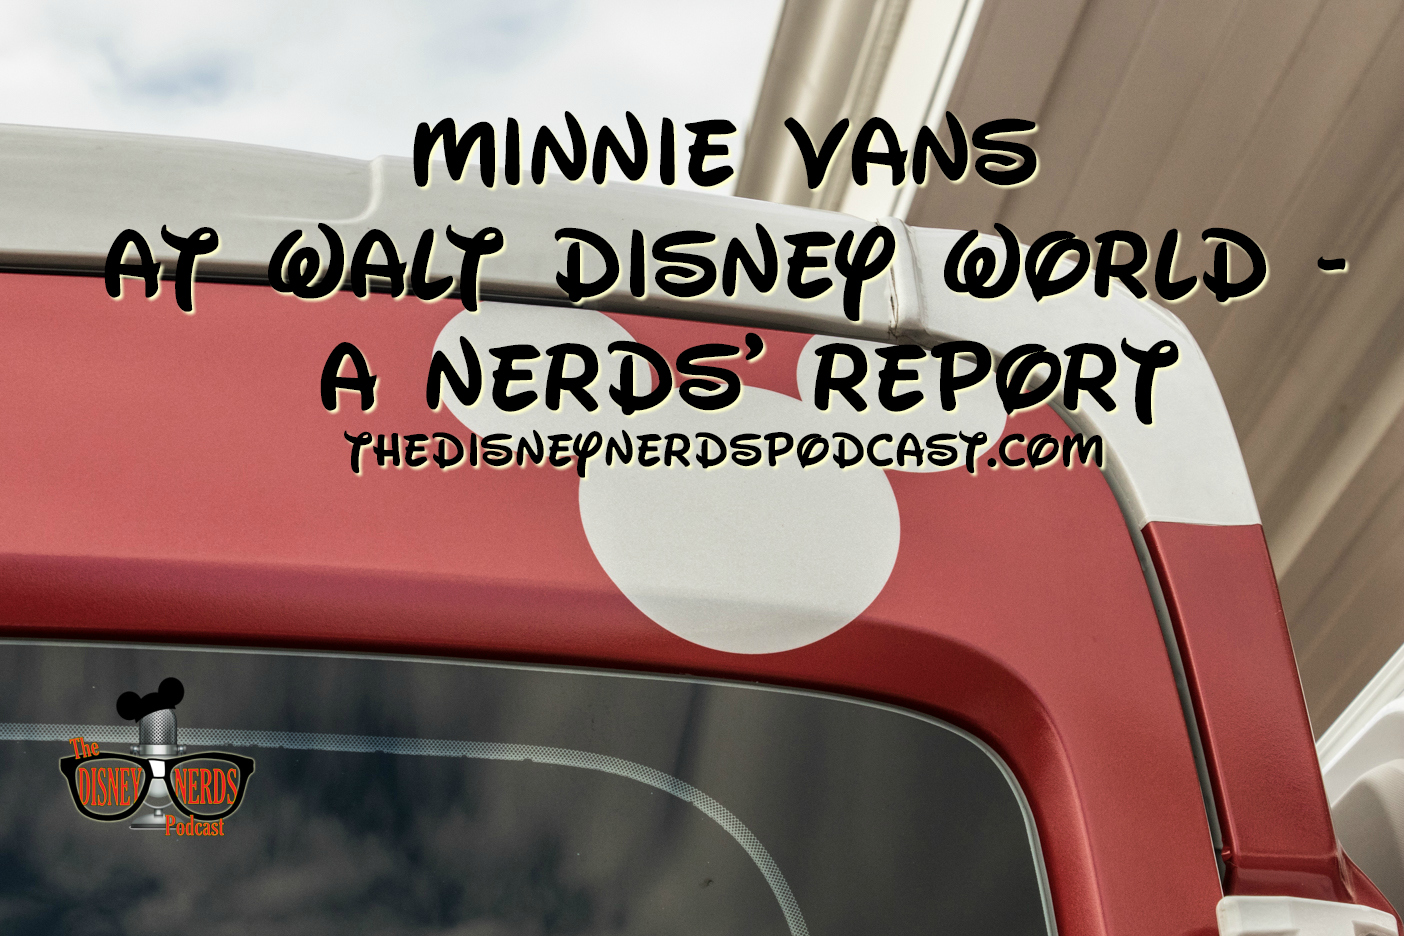 Take a ride in the new Minnie Vans at Walt Disney World - The Disney Nerds Podcast thedisneynerdspodcast.com